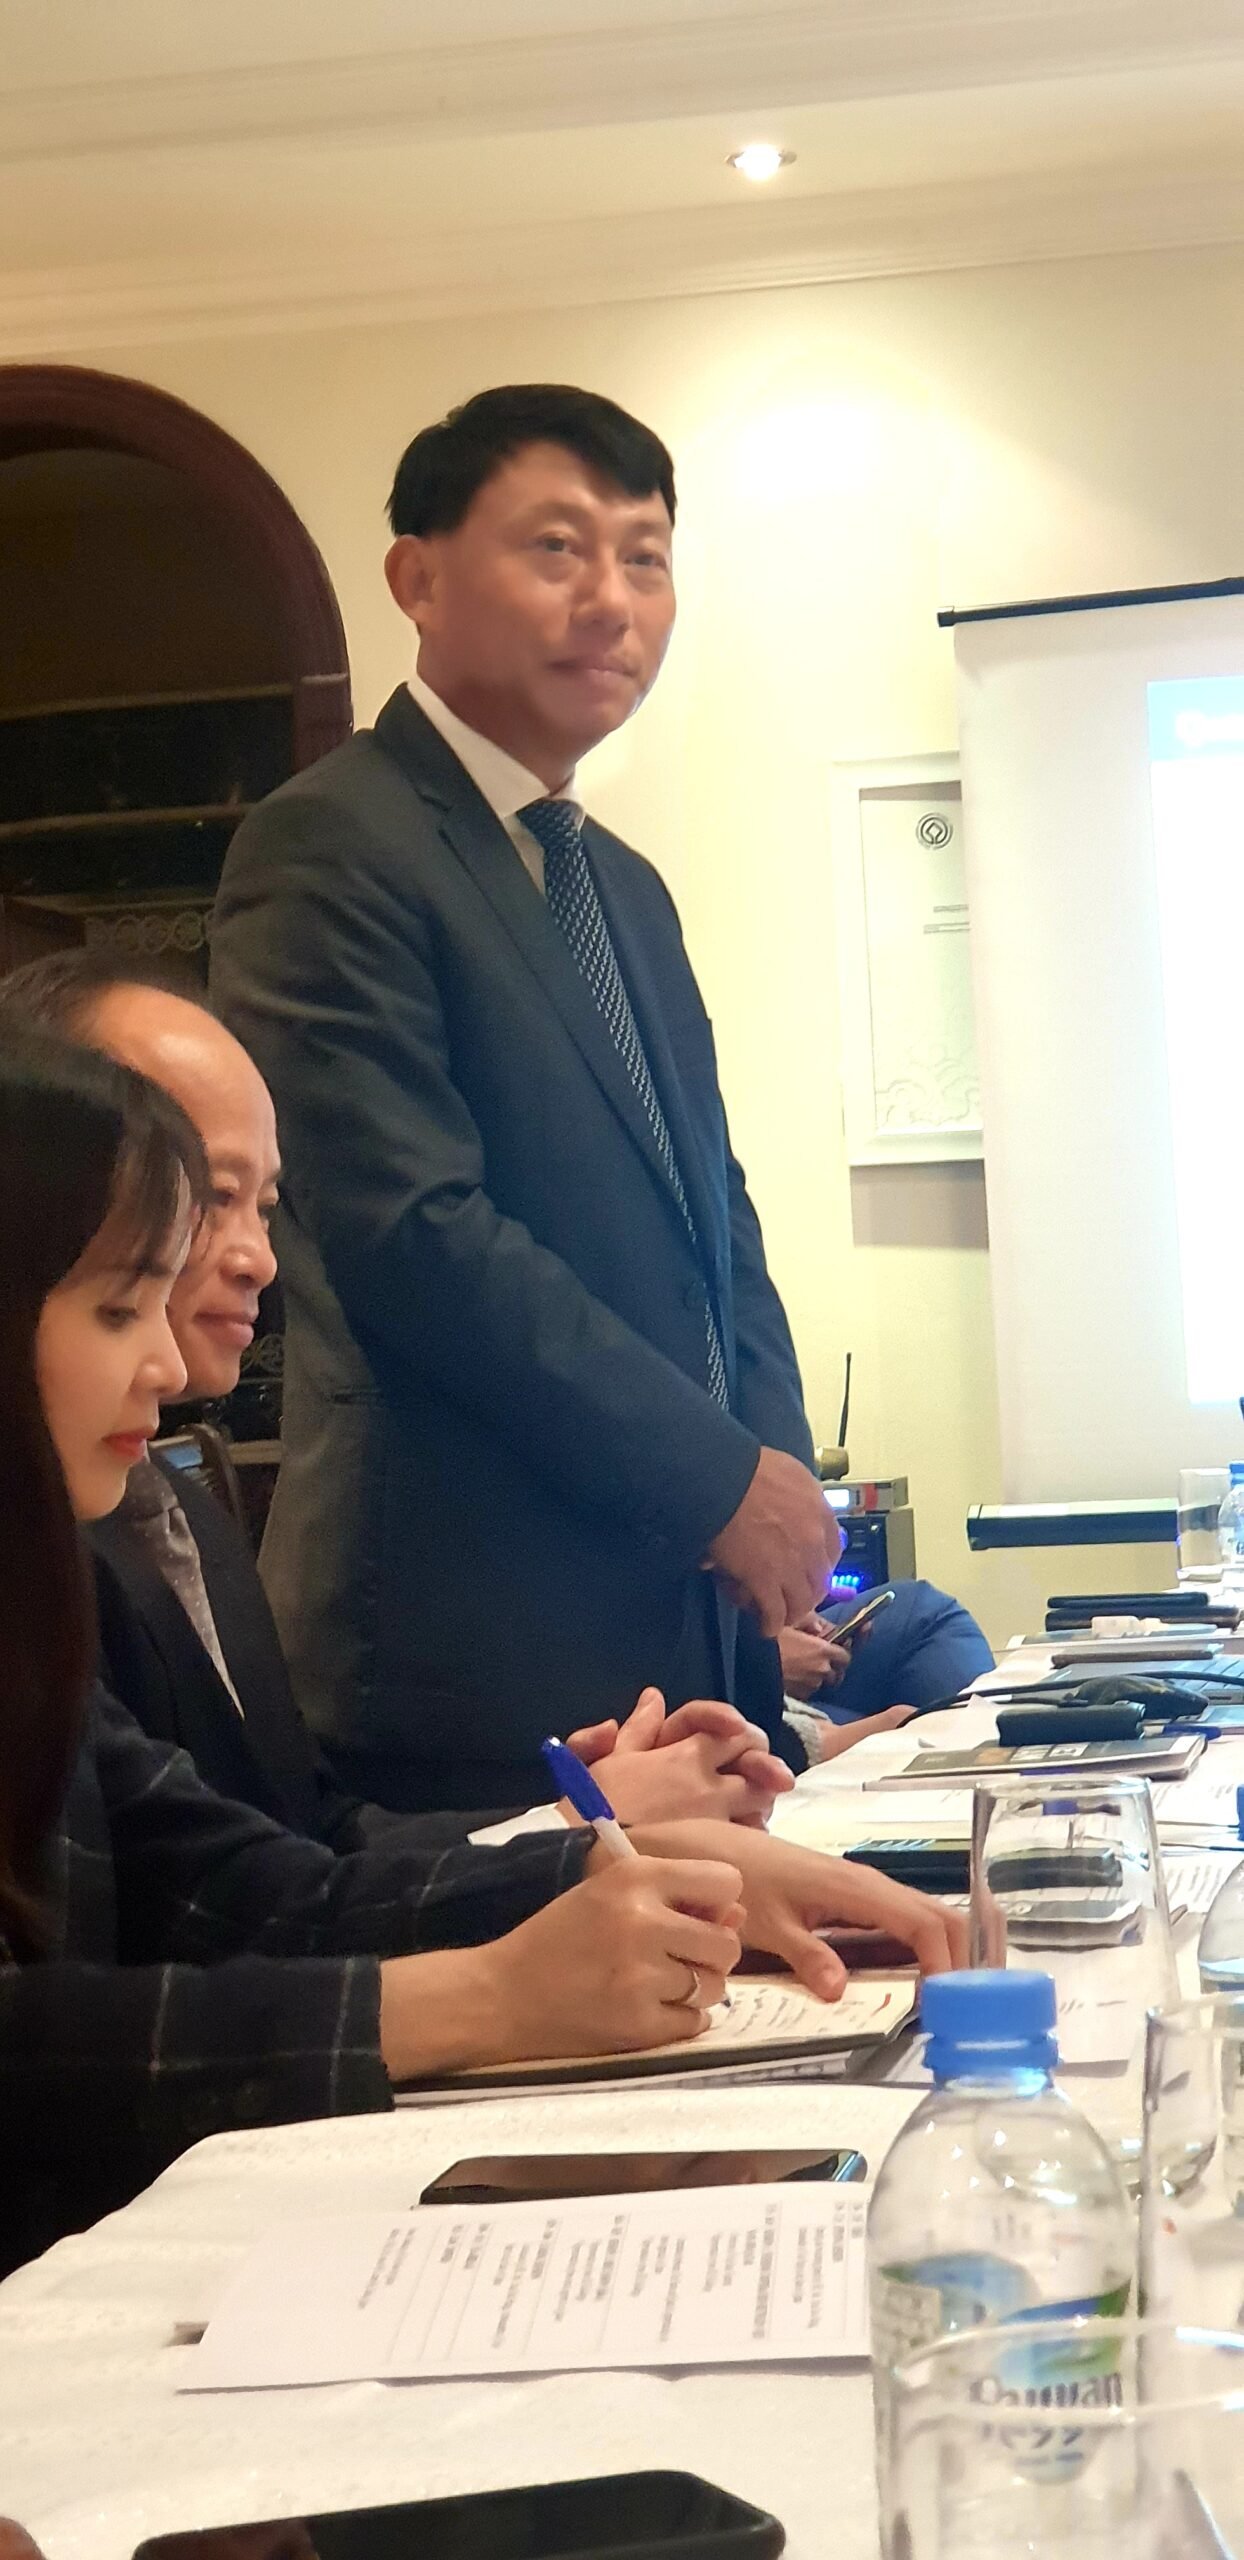 Vietnam Ambassador Calls to Boost Tourism Ties With Qatar